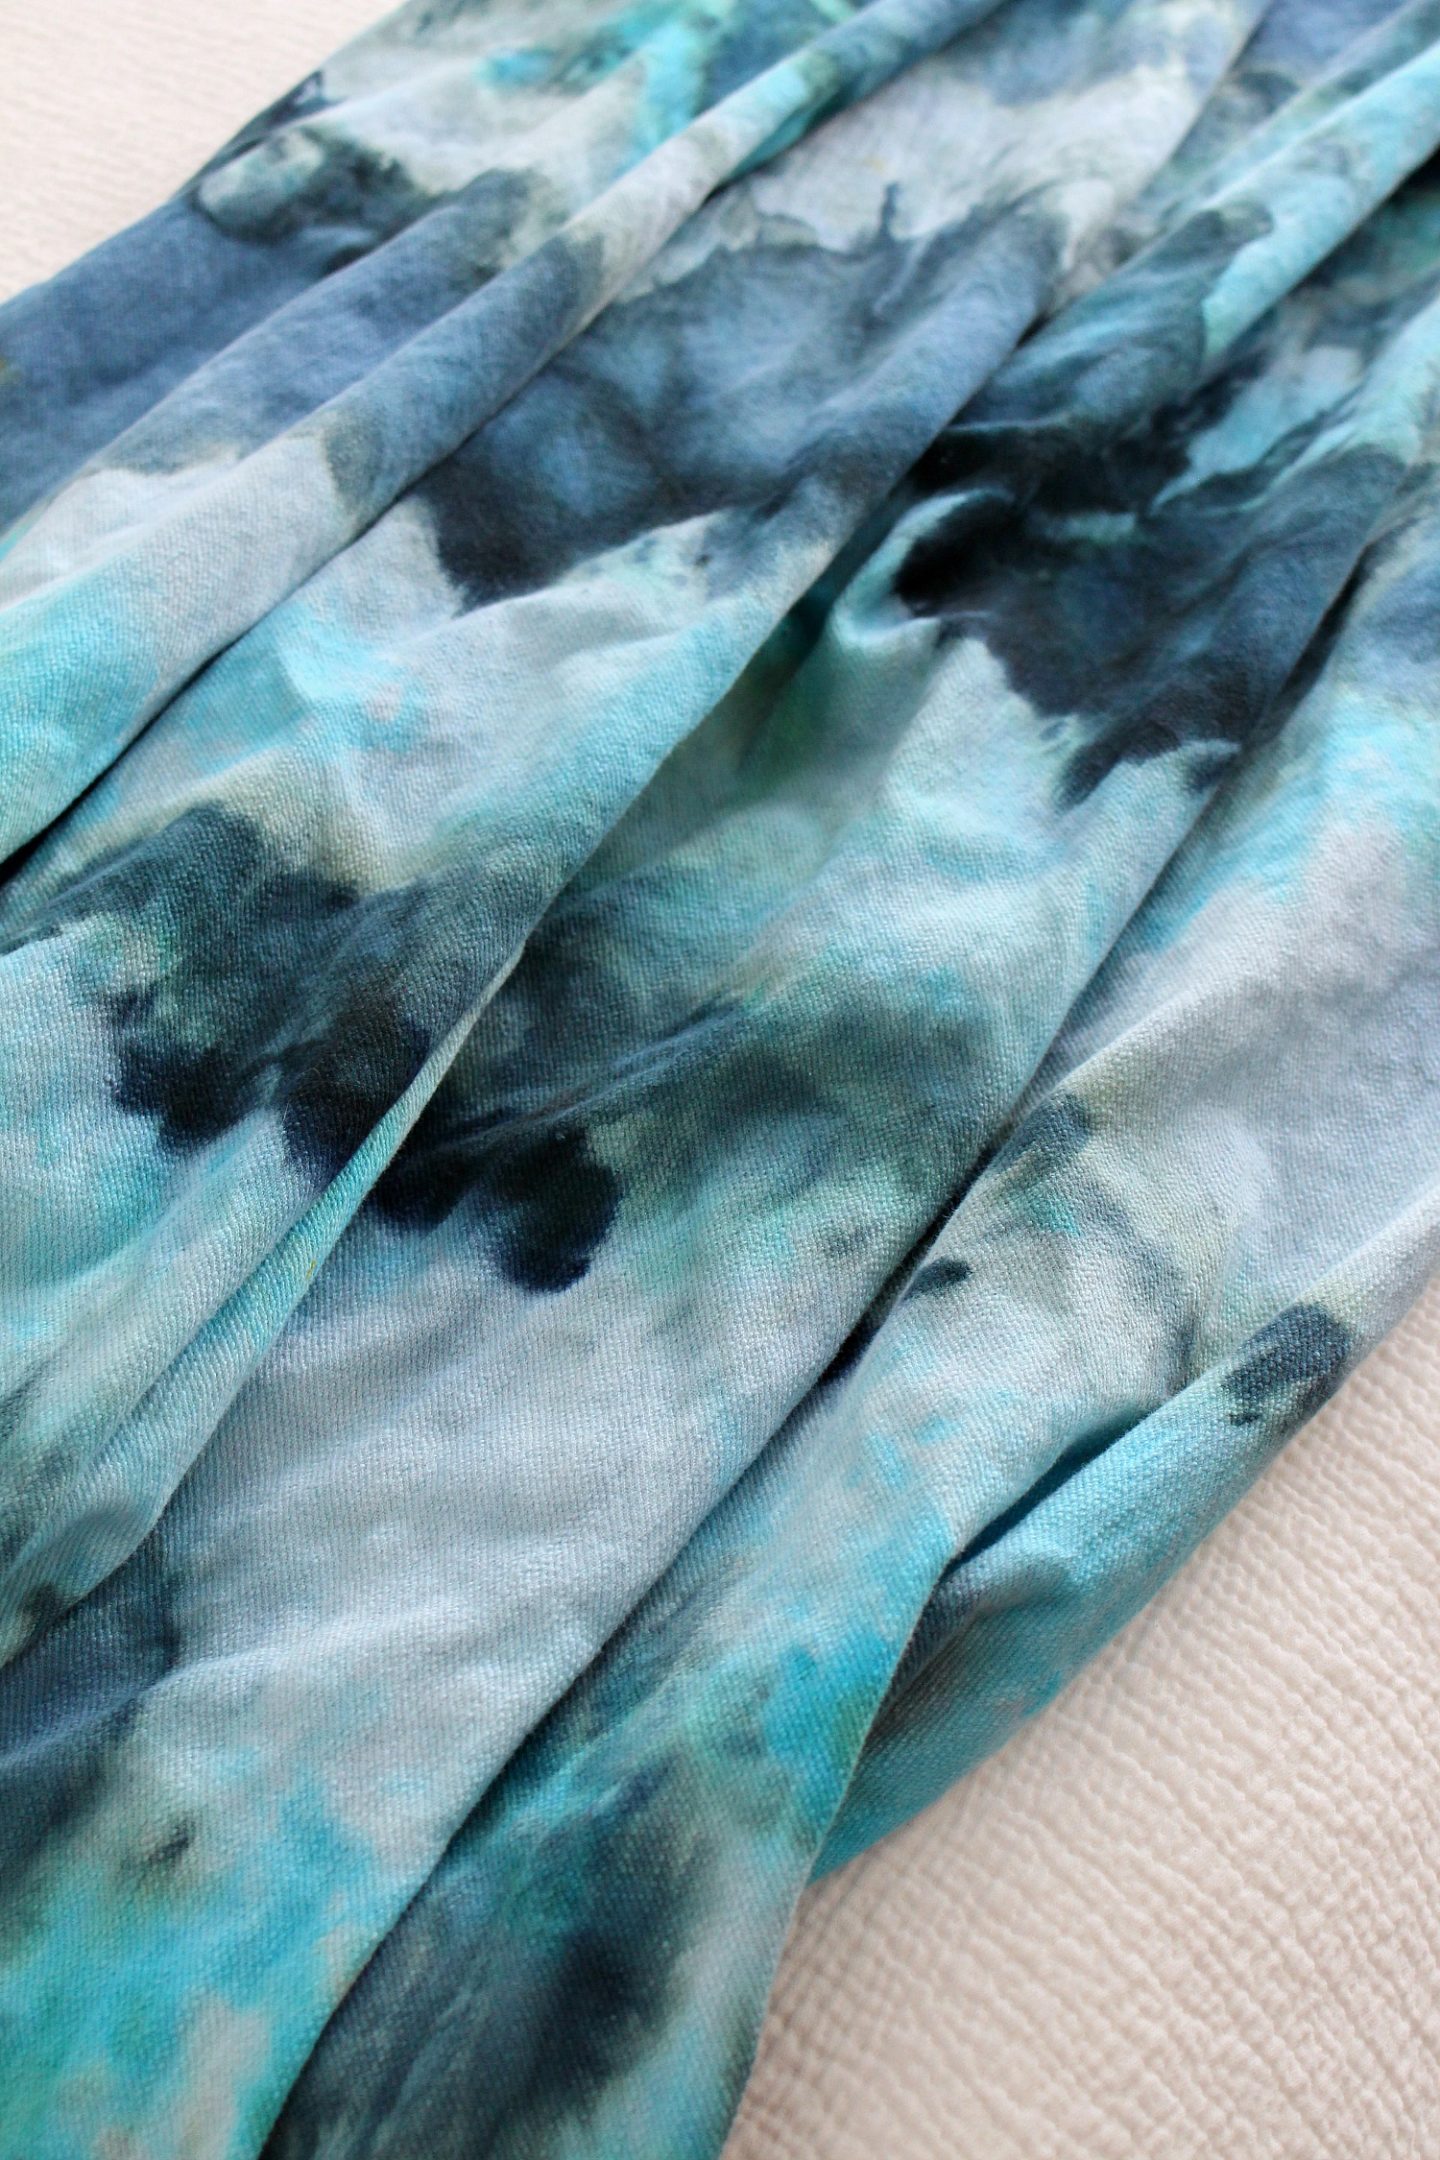 Beachy DIY Ice Dye Throw Blanket | How to Ice Dye